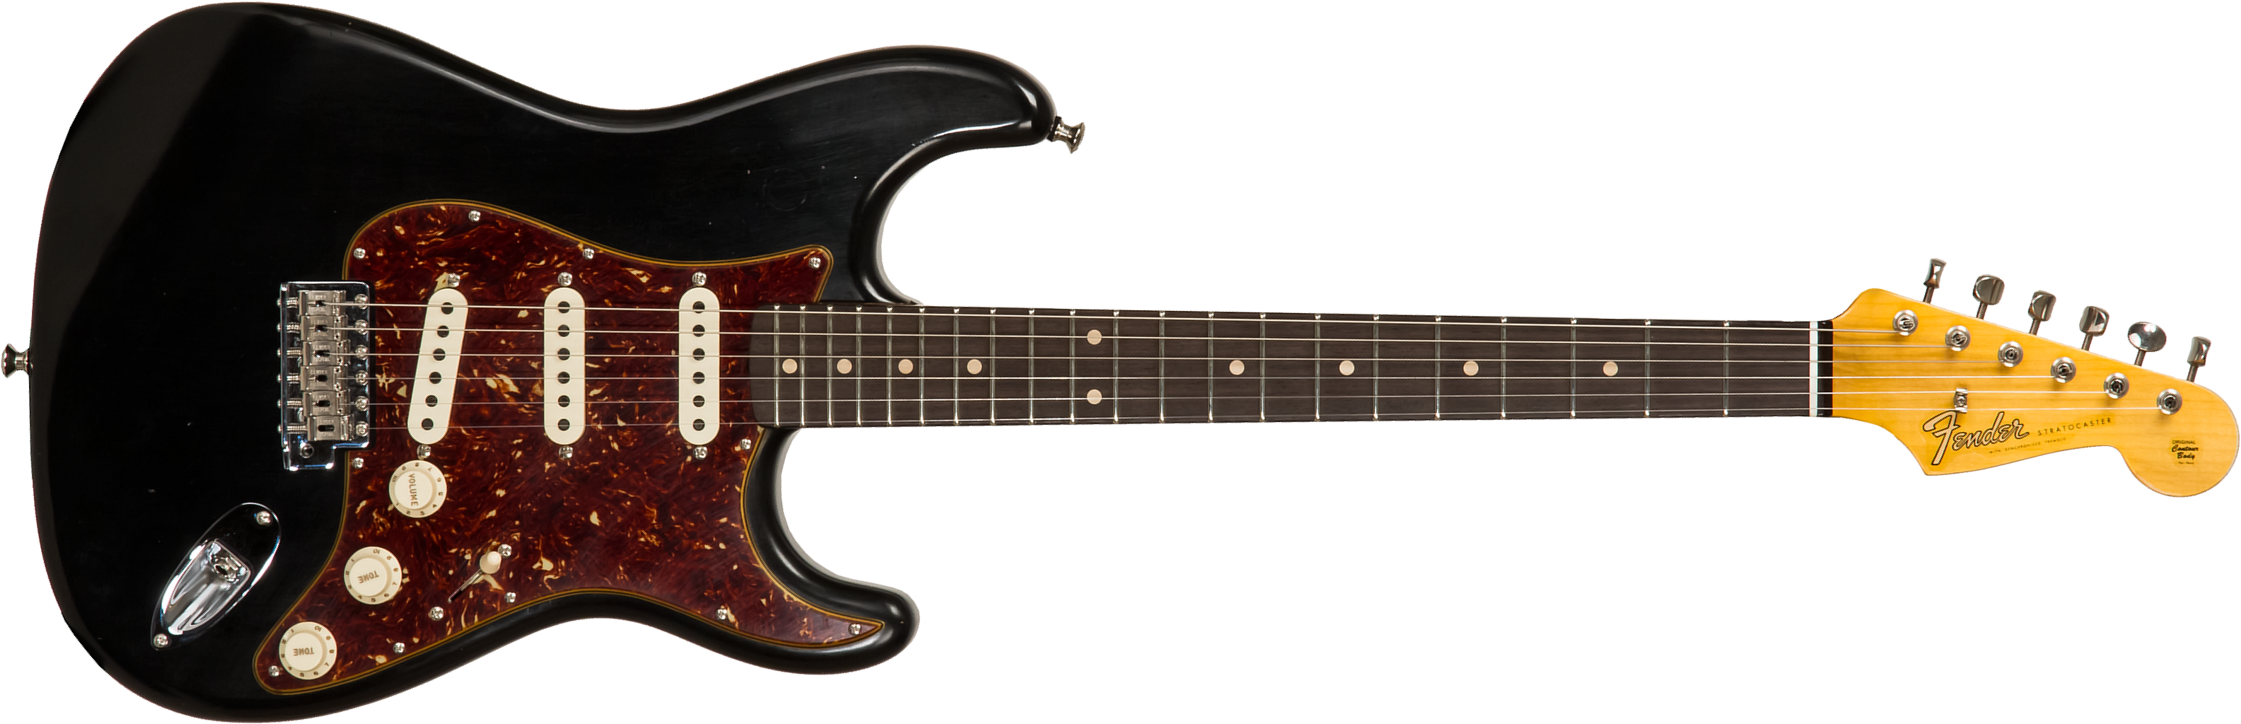 Fender Custom Shop Strat Postmodern 3s Trem Rw #xn13616 - Journeyman Relic Aged Black - E-Gitarre in Str-Form - Main picture